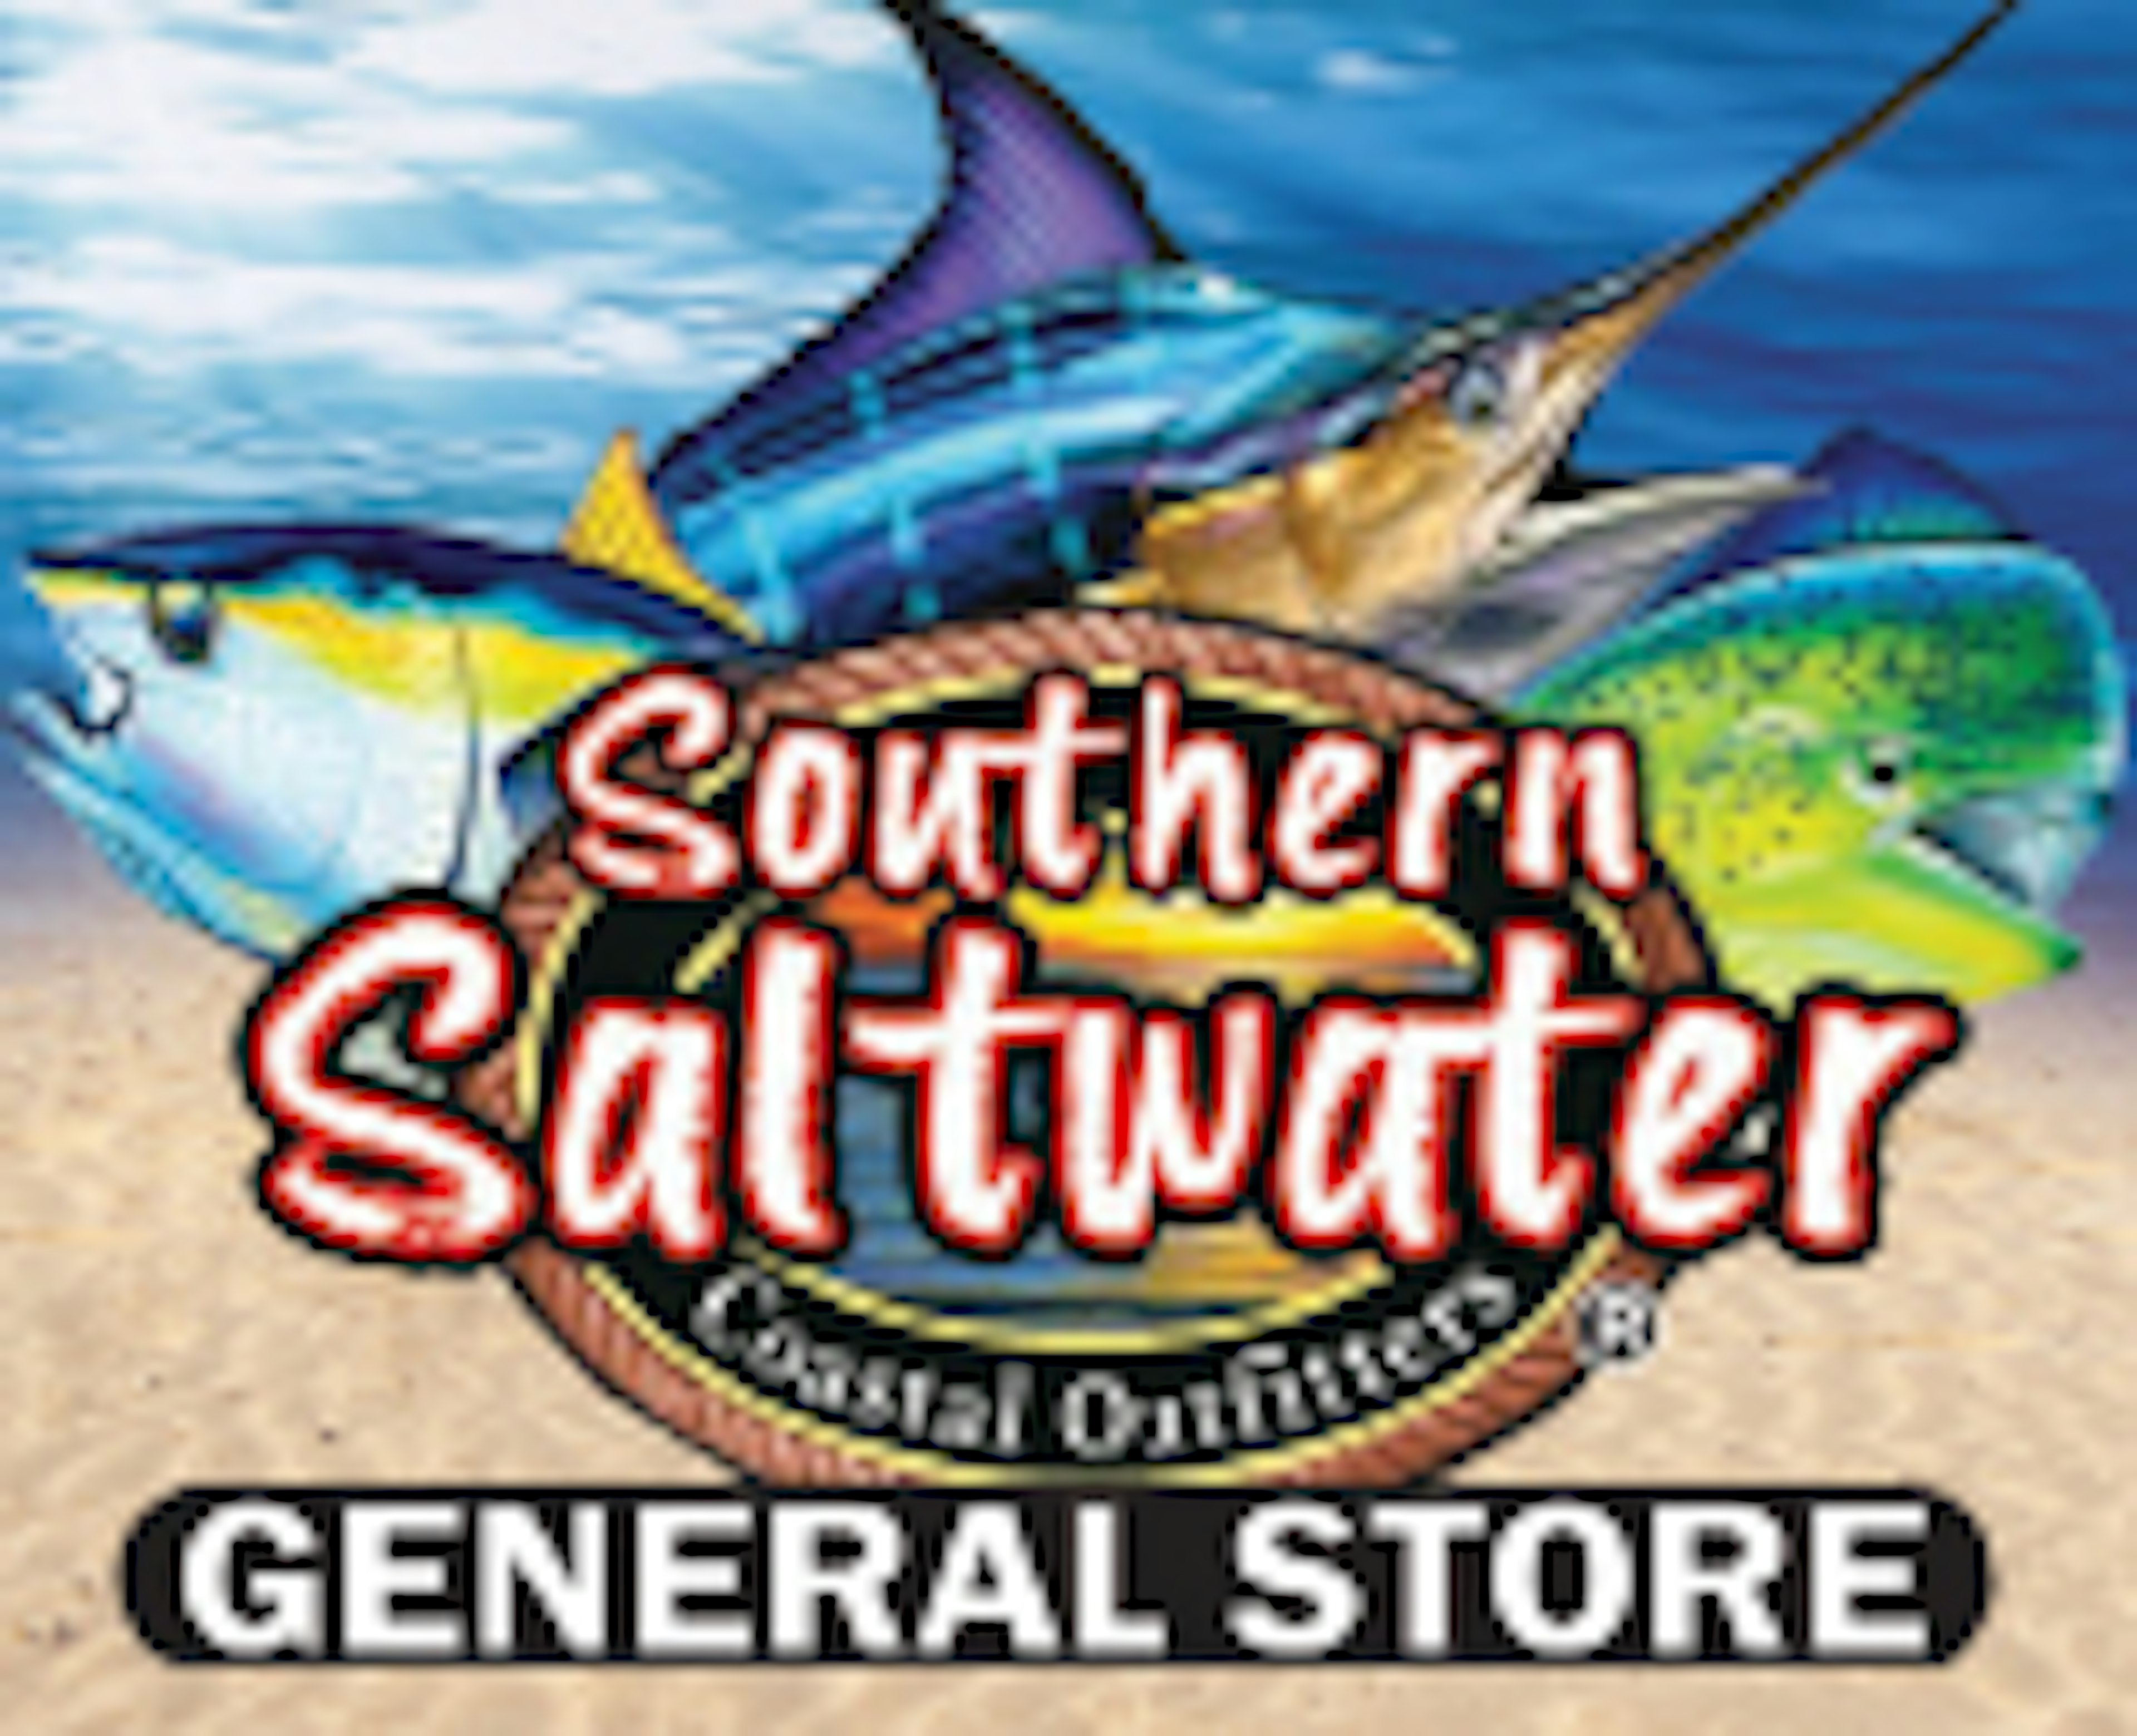 Southern Saltwater General Store &#038; Resort Wear